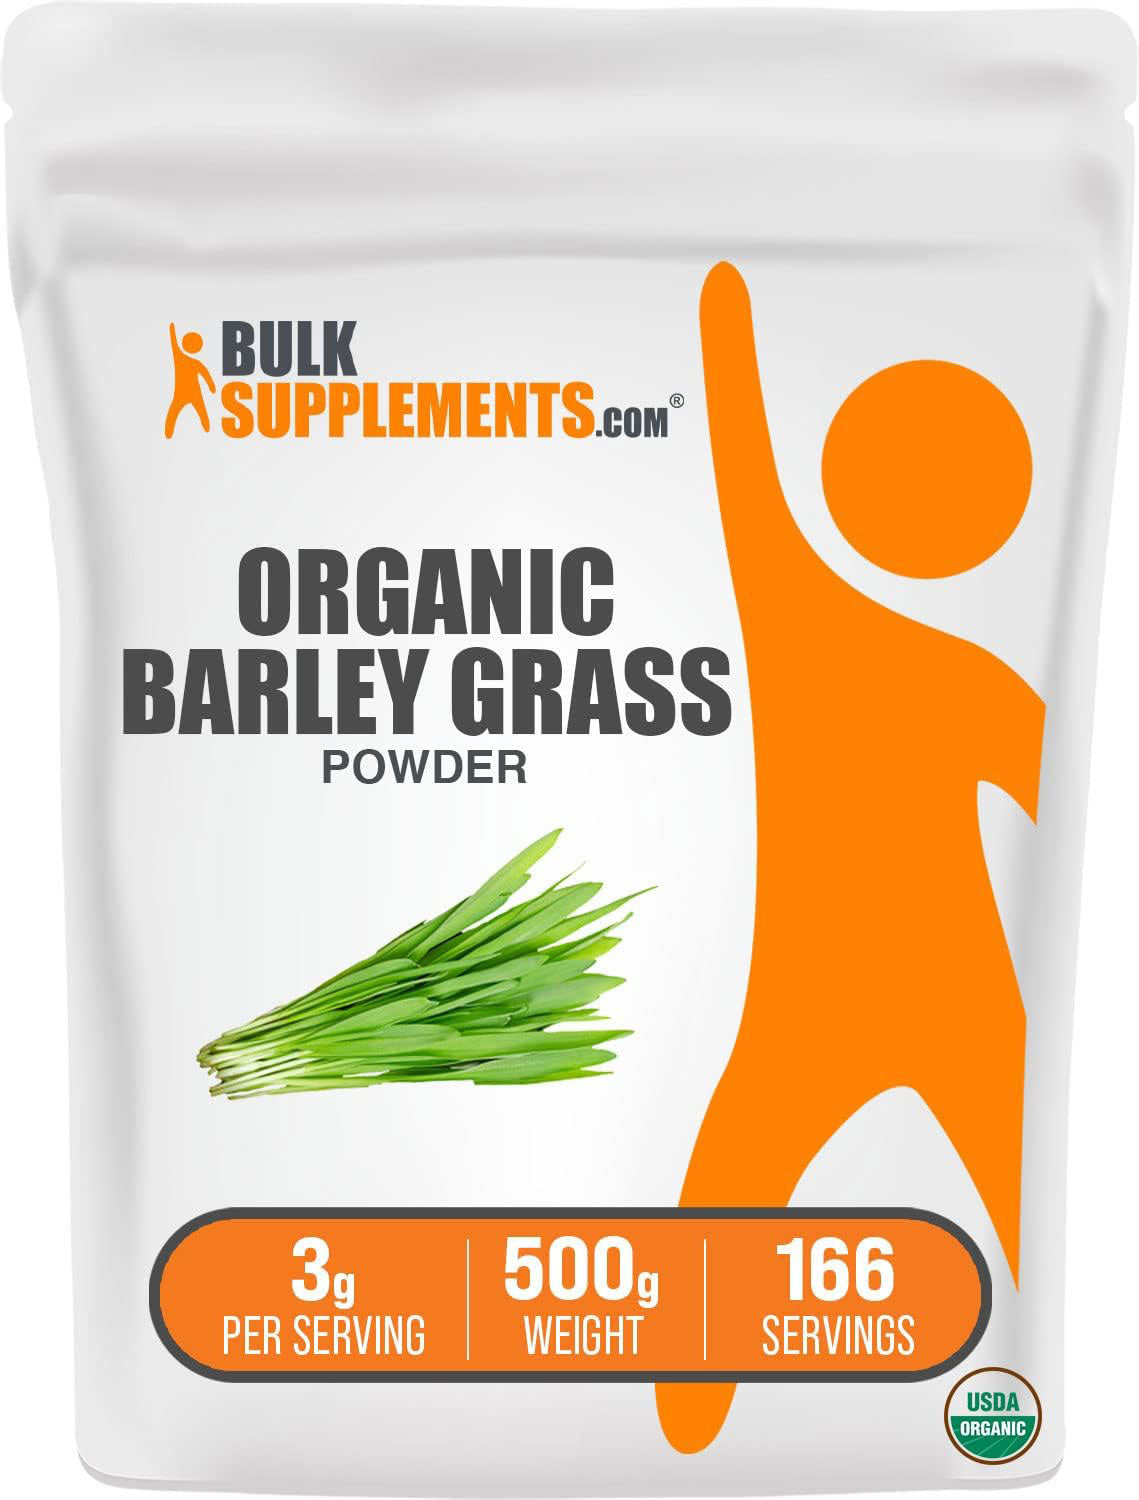 Organic Barley Grass Powder 500g bag with 166 servings at 3g per serving